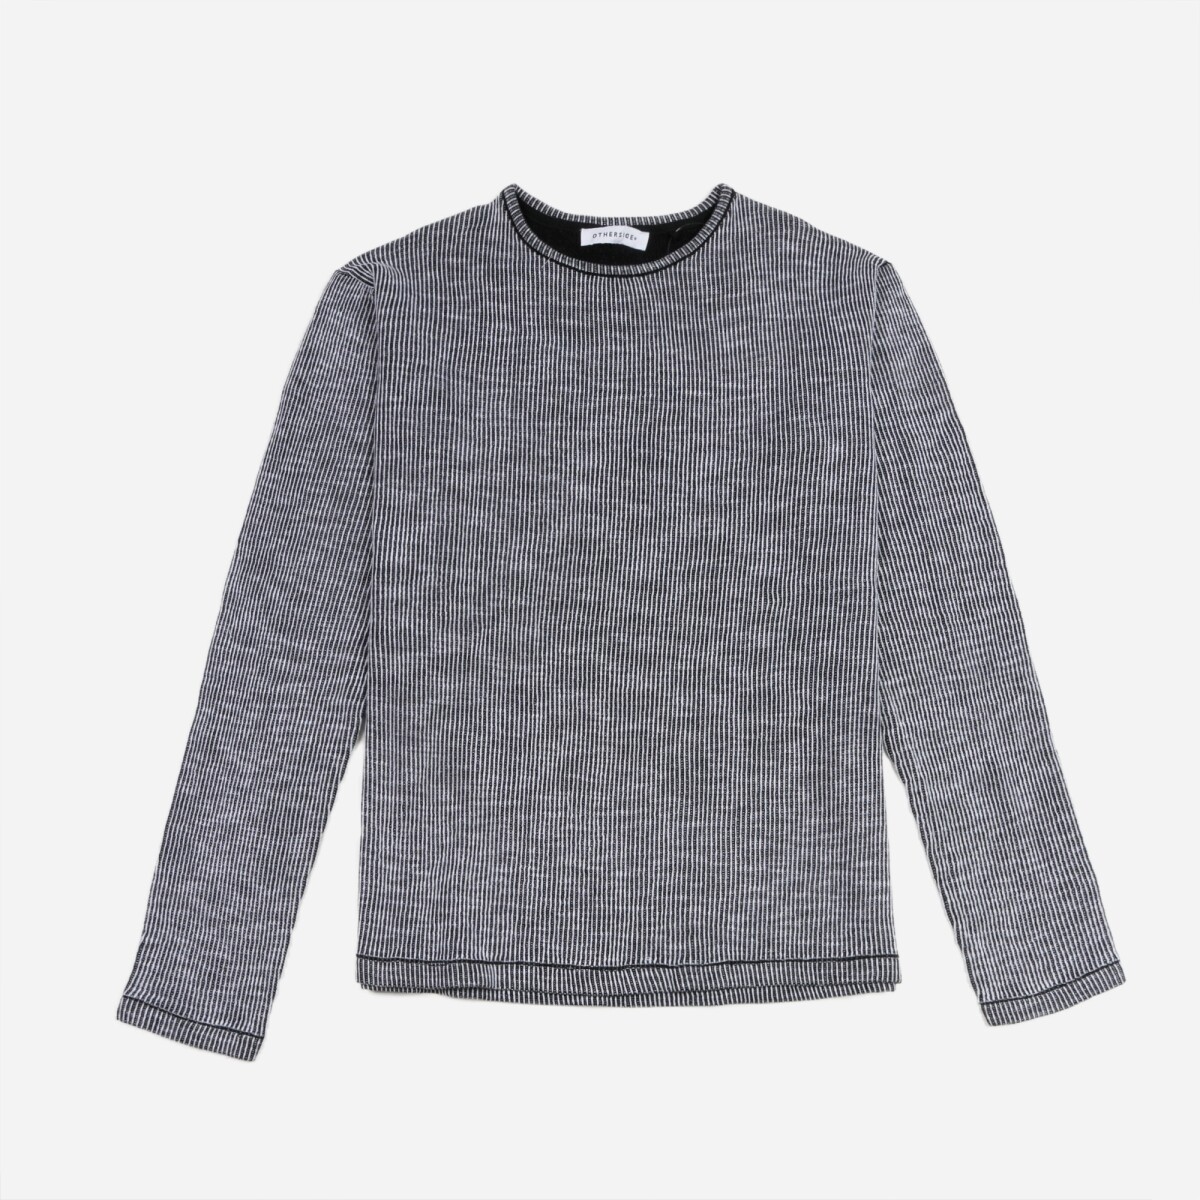 Sweater jaspeado - Hombre - GRIS OSCURO 